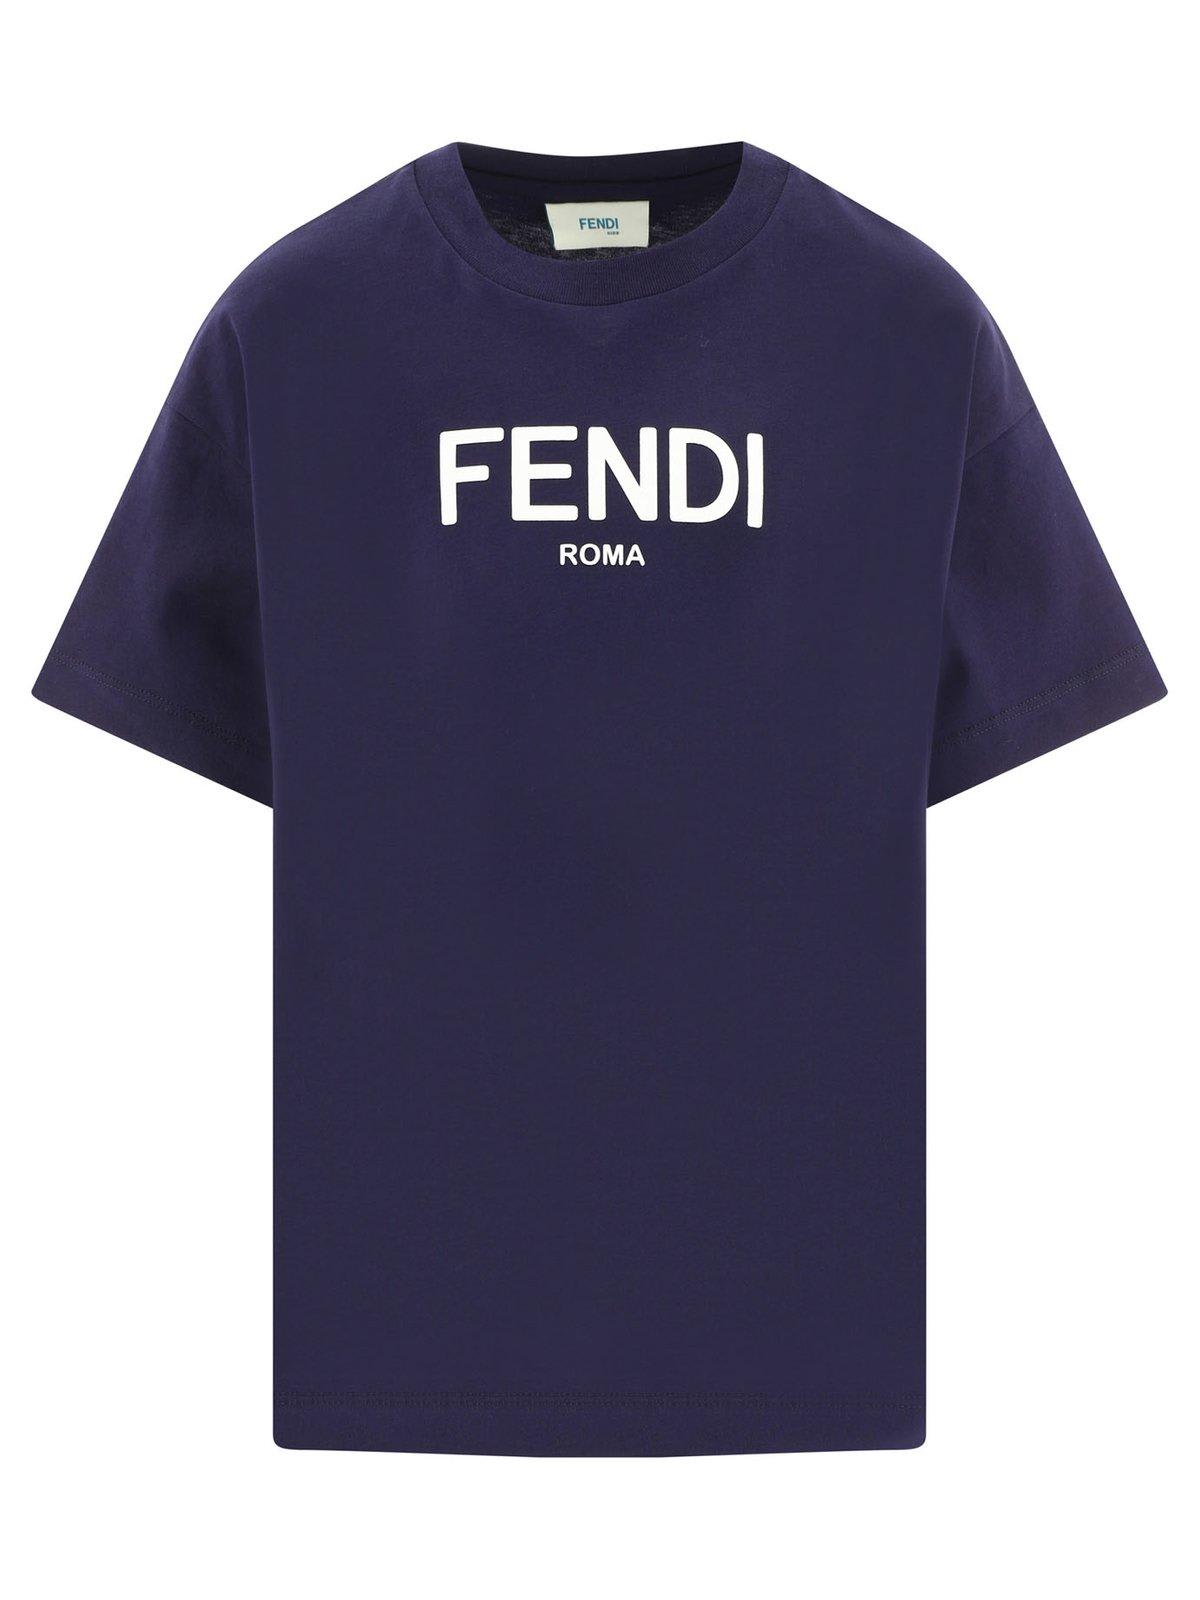 Fendi Roma Printed Crewneck T-shirt